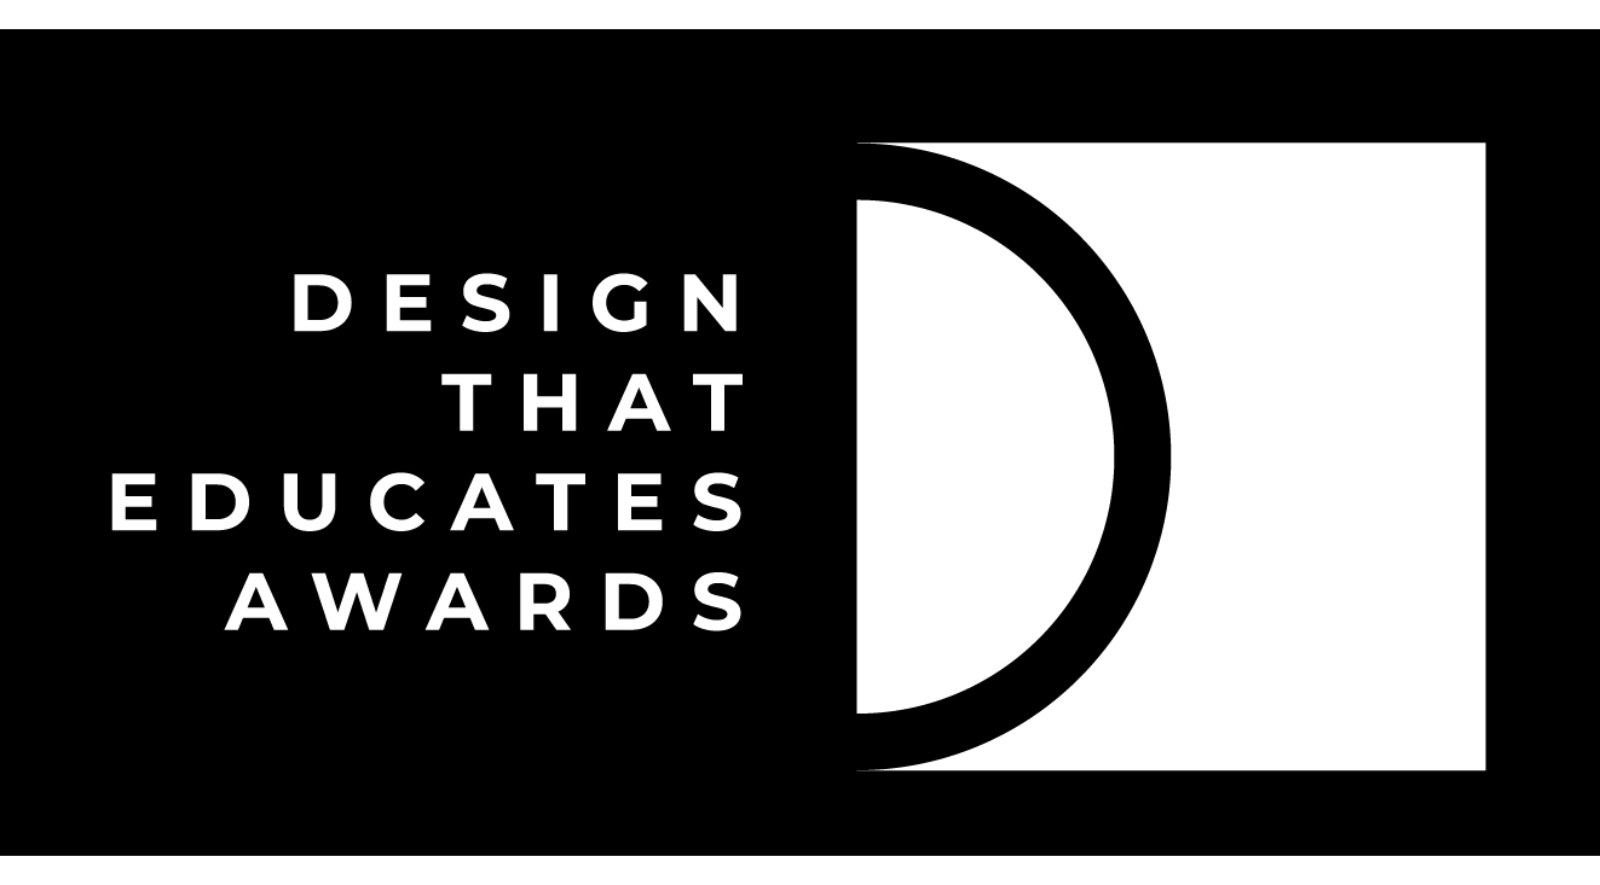 Design that Educates Awards